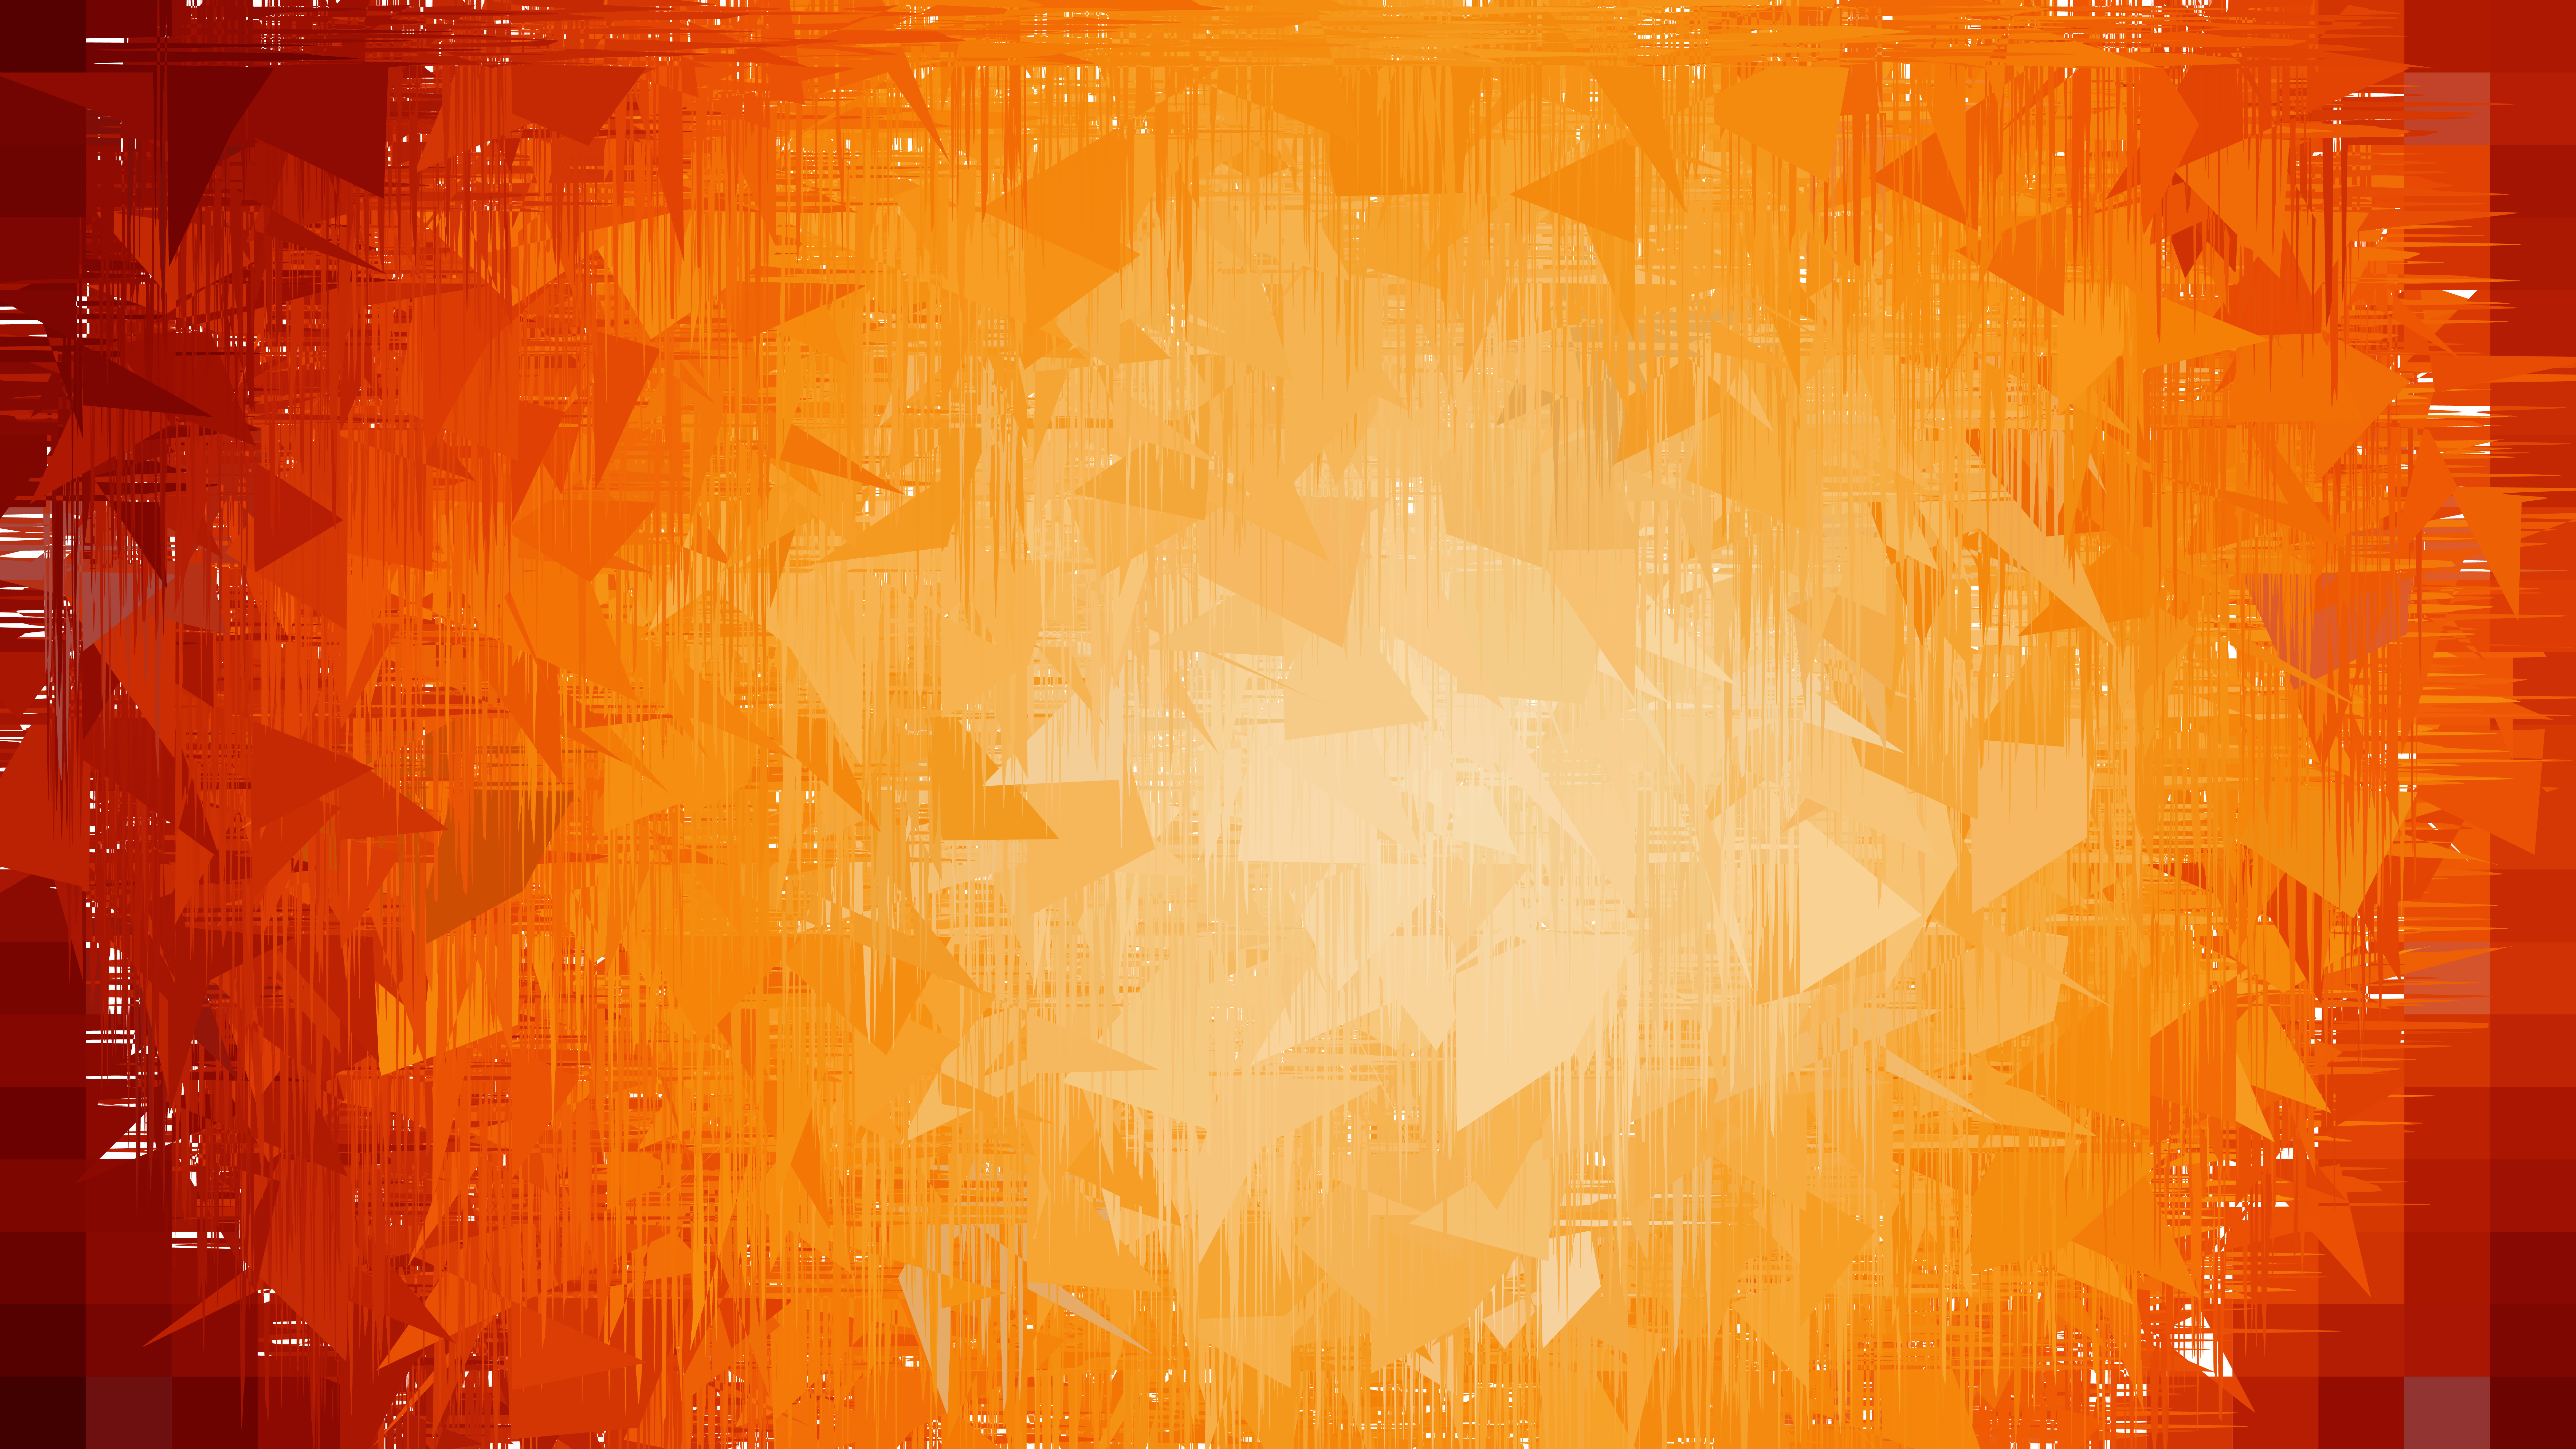 orange texture background images